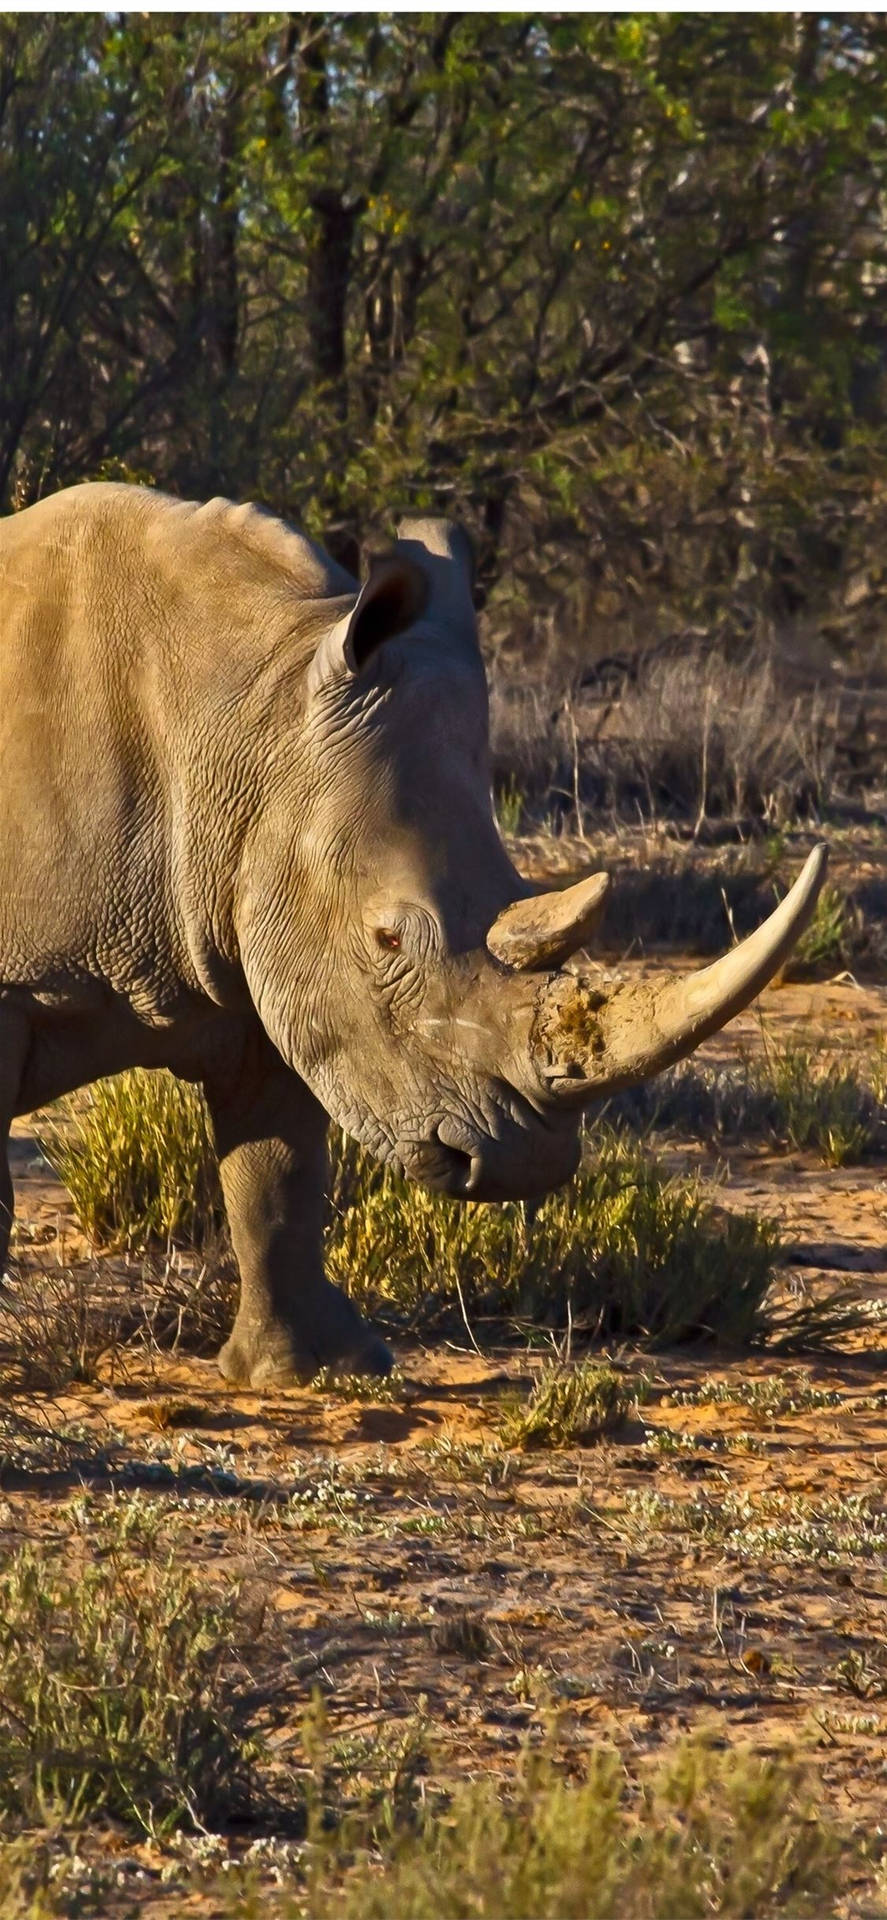 Rhinoceros With Damaged Horns